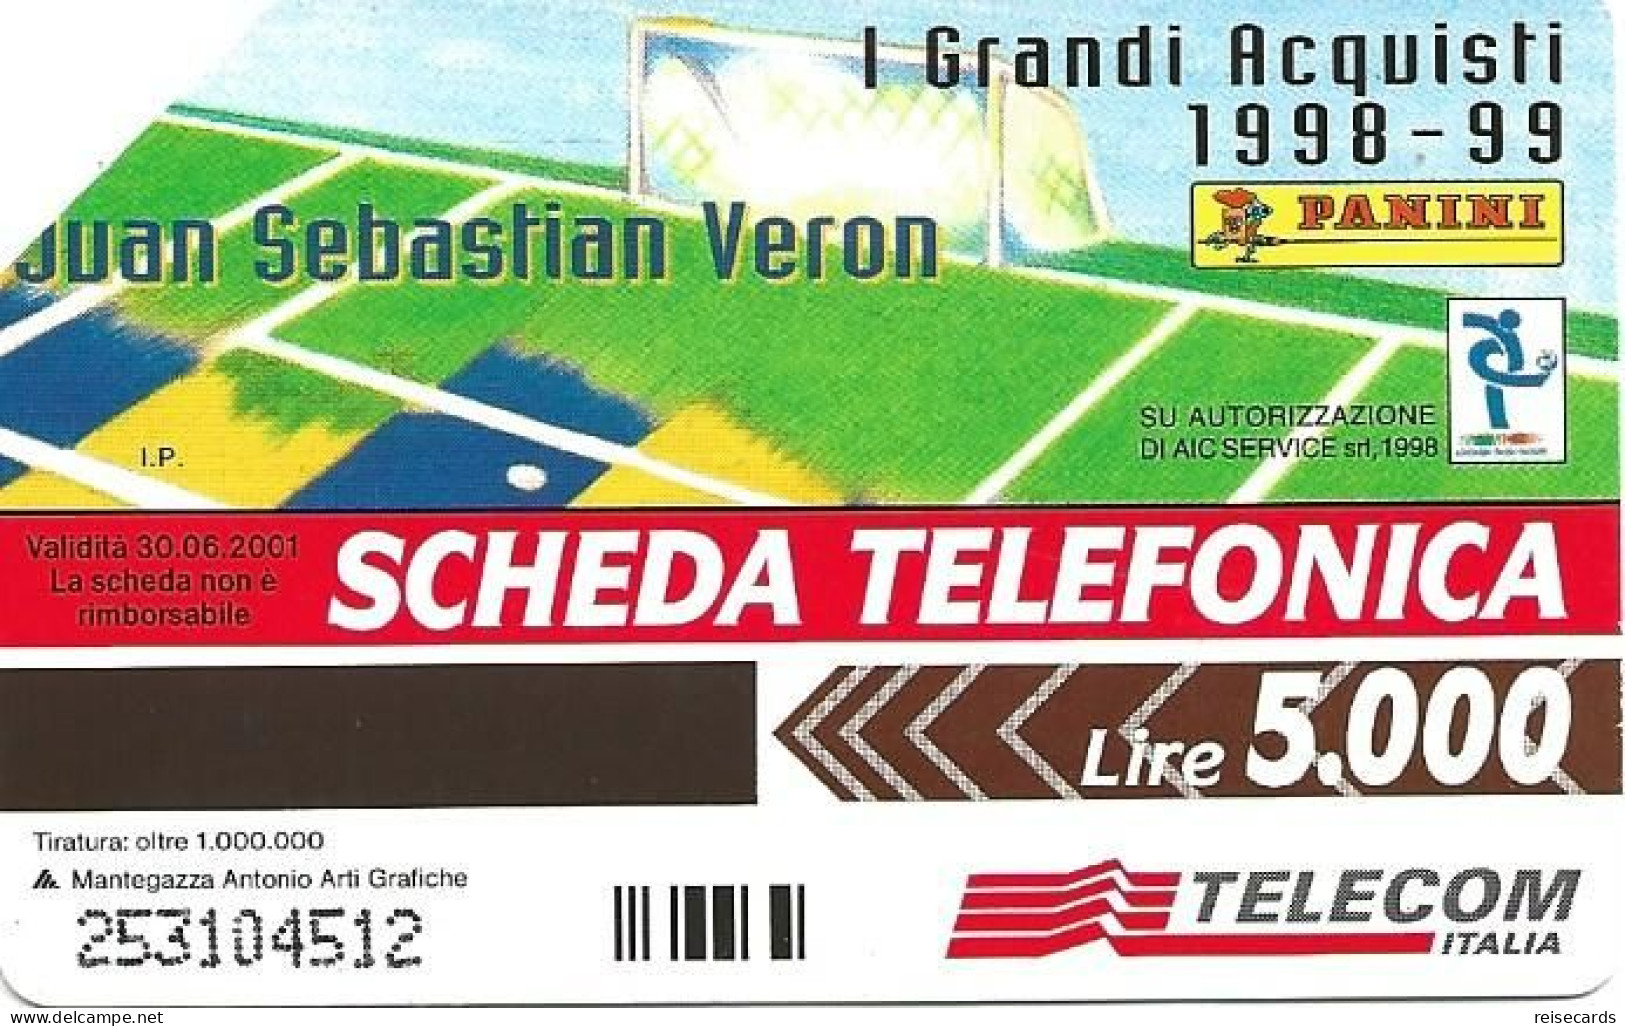 Italy: Telecom Italia - Panini, I Grandi Acquisti, Juan Sebastian Veron - Públicas  Publicitarias